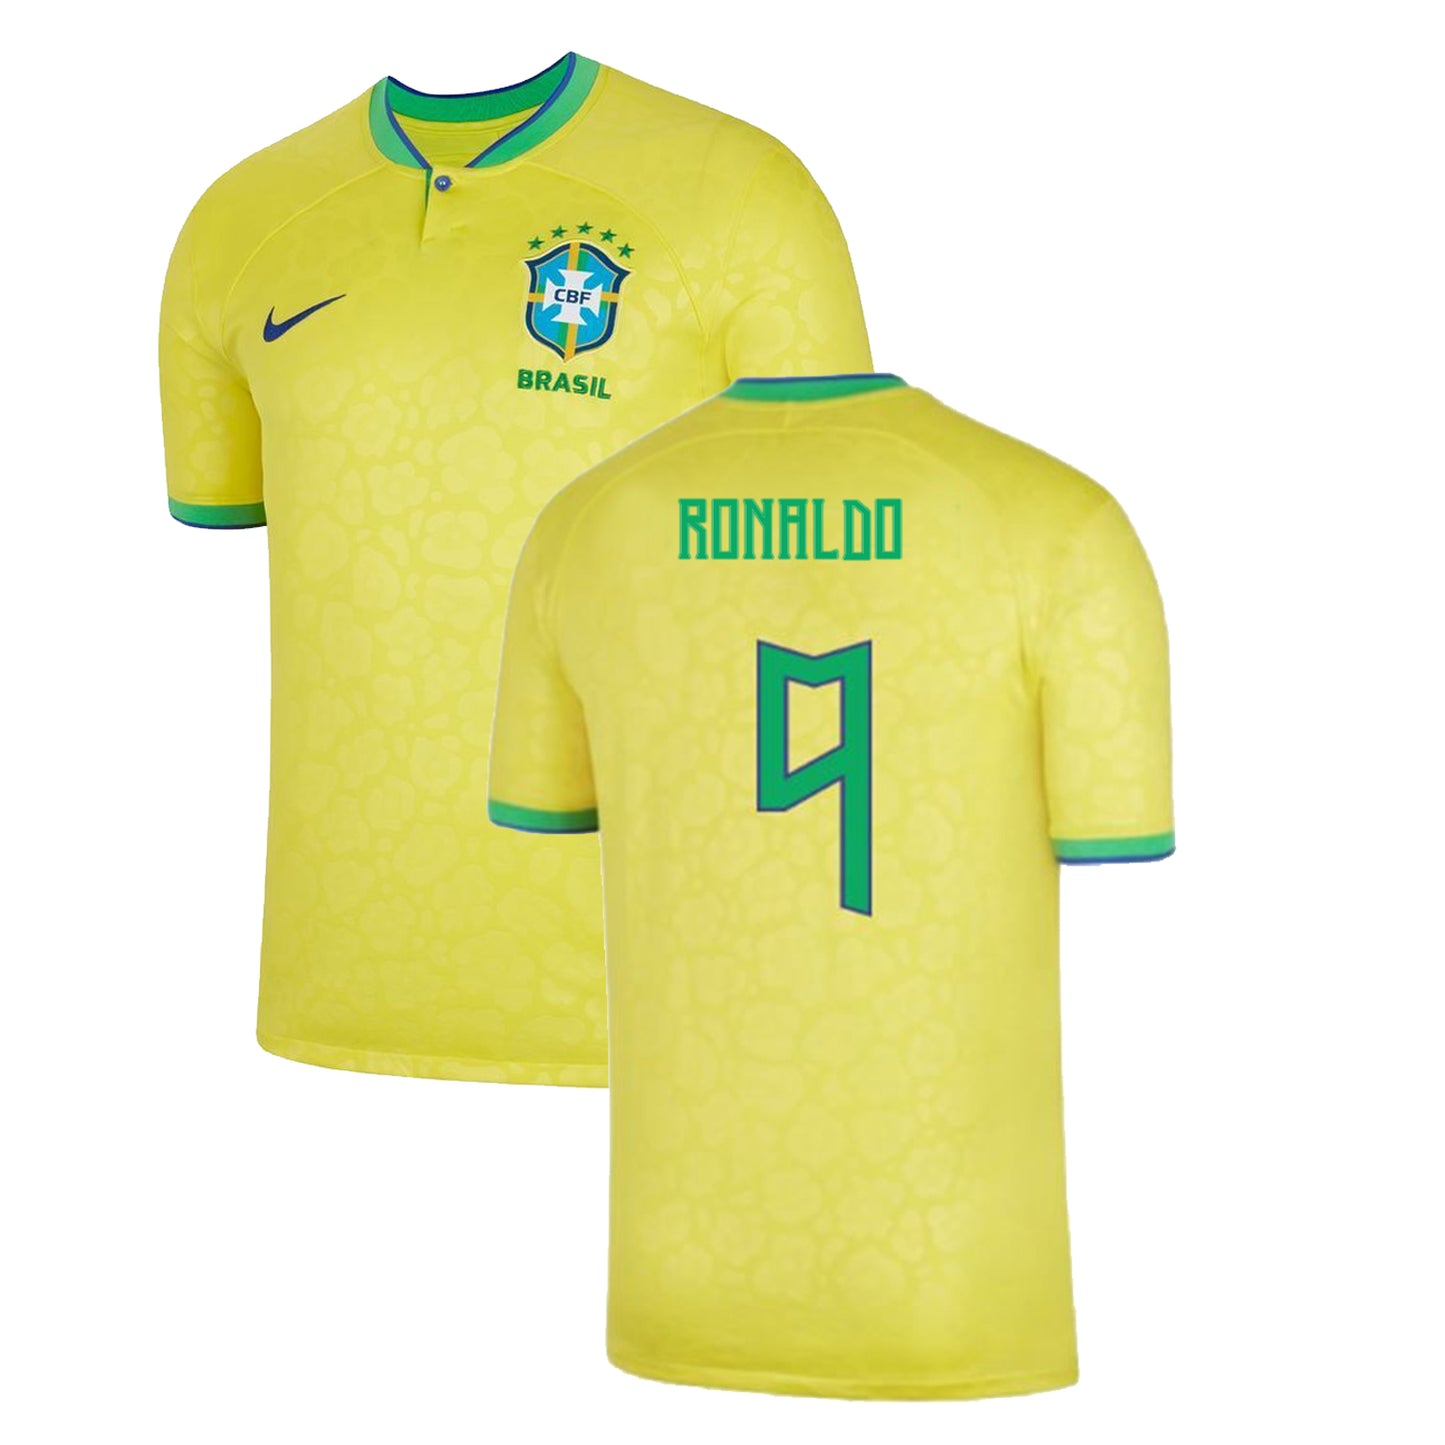 Ronaldo Brazil 9 Jersey